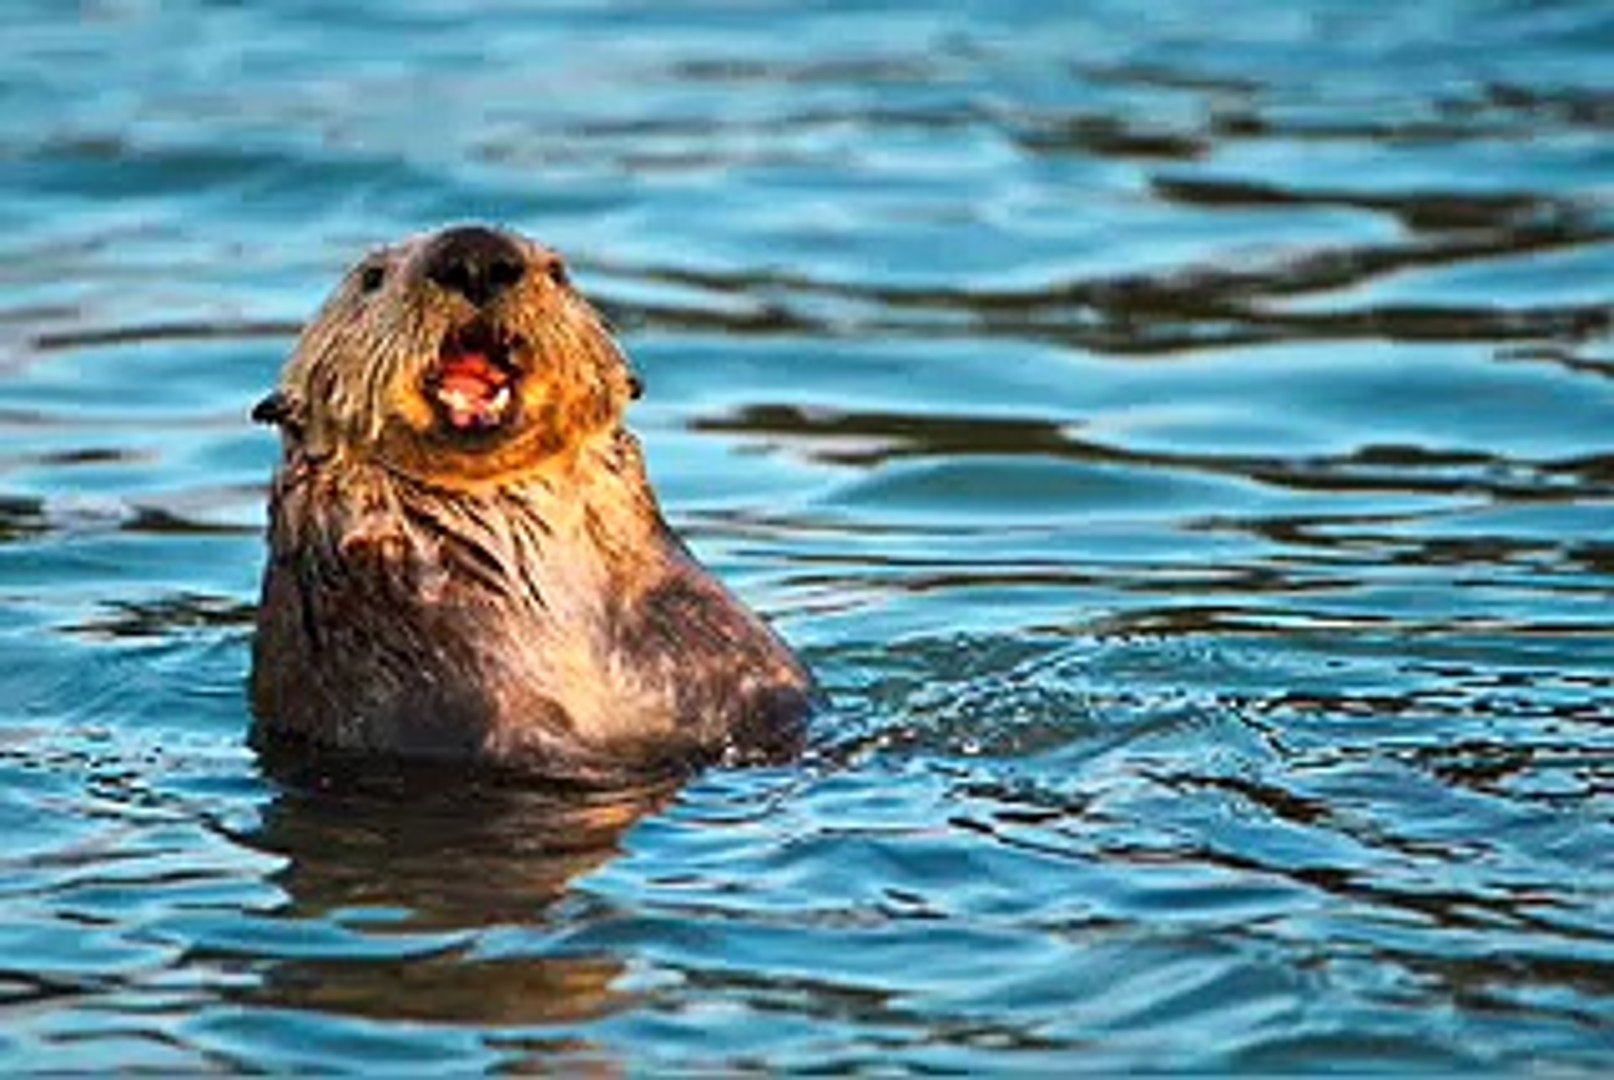 Sea Otter holding camera - Elkhorn Slough